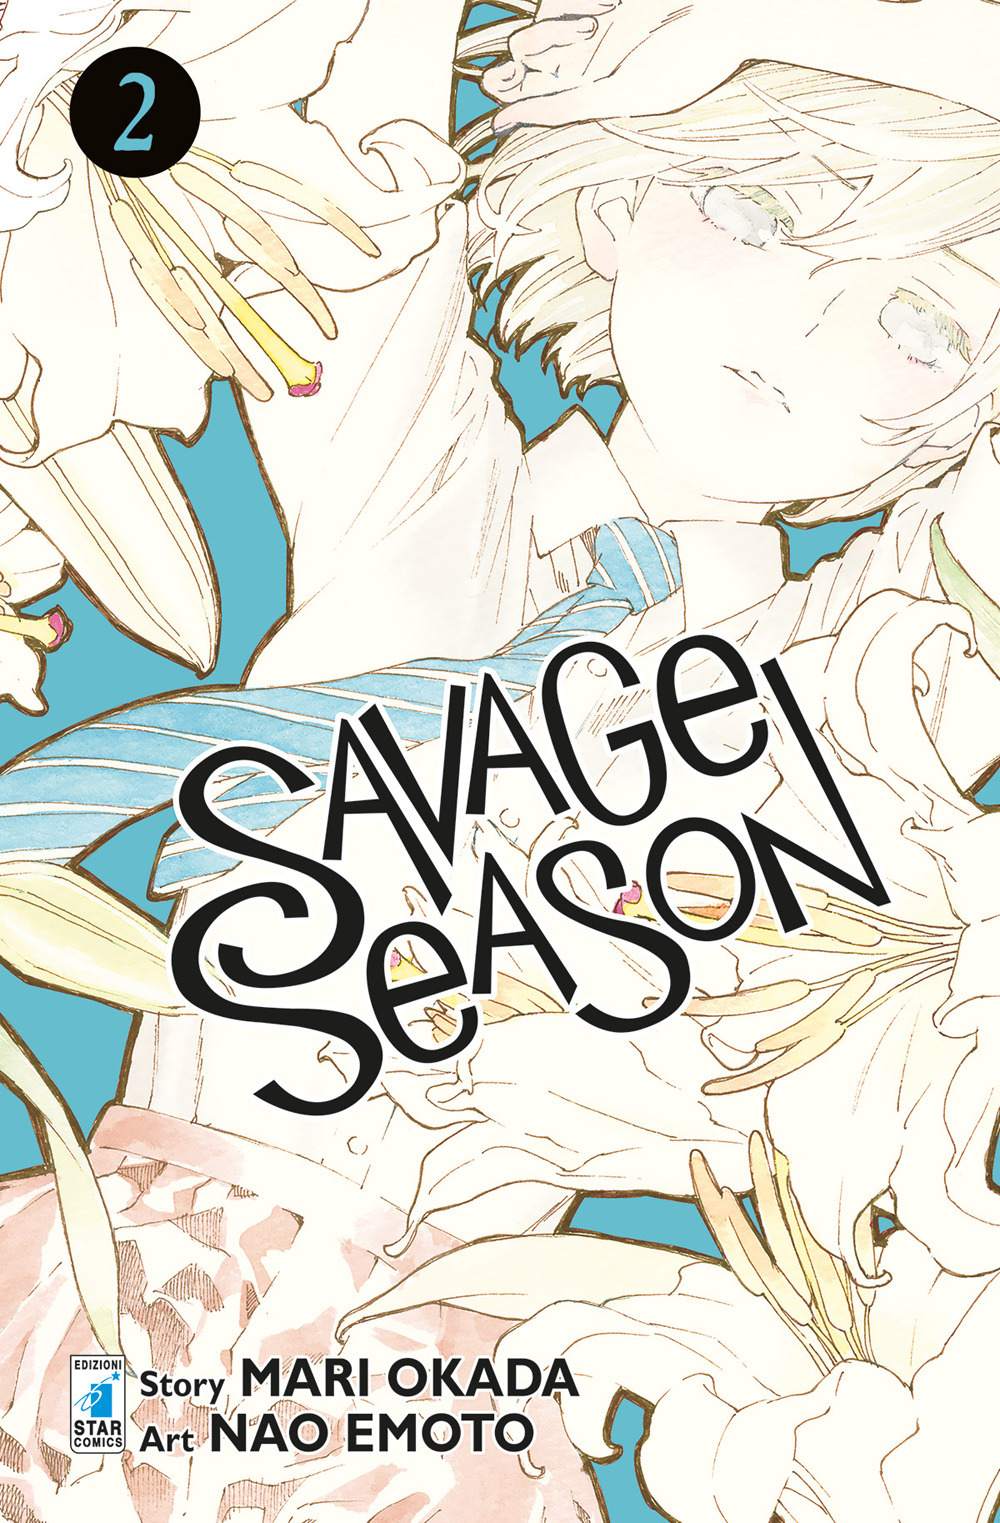 Savage season. Vol. 2